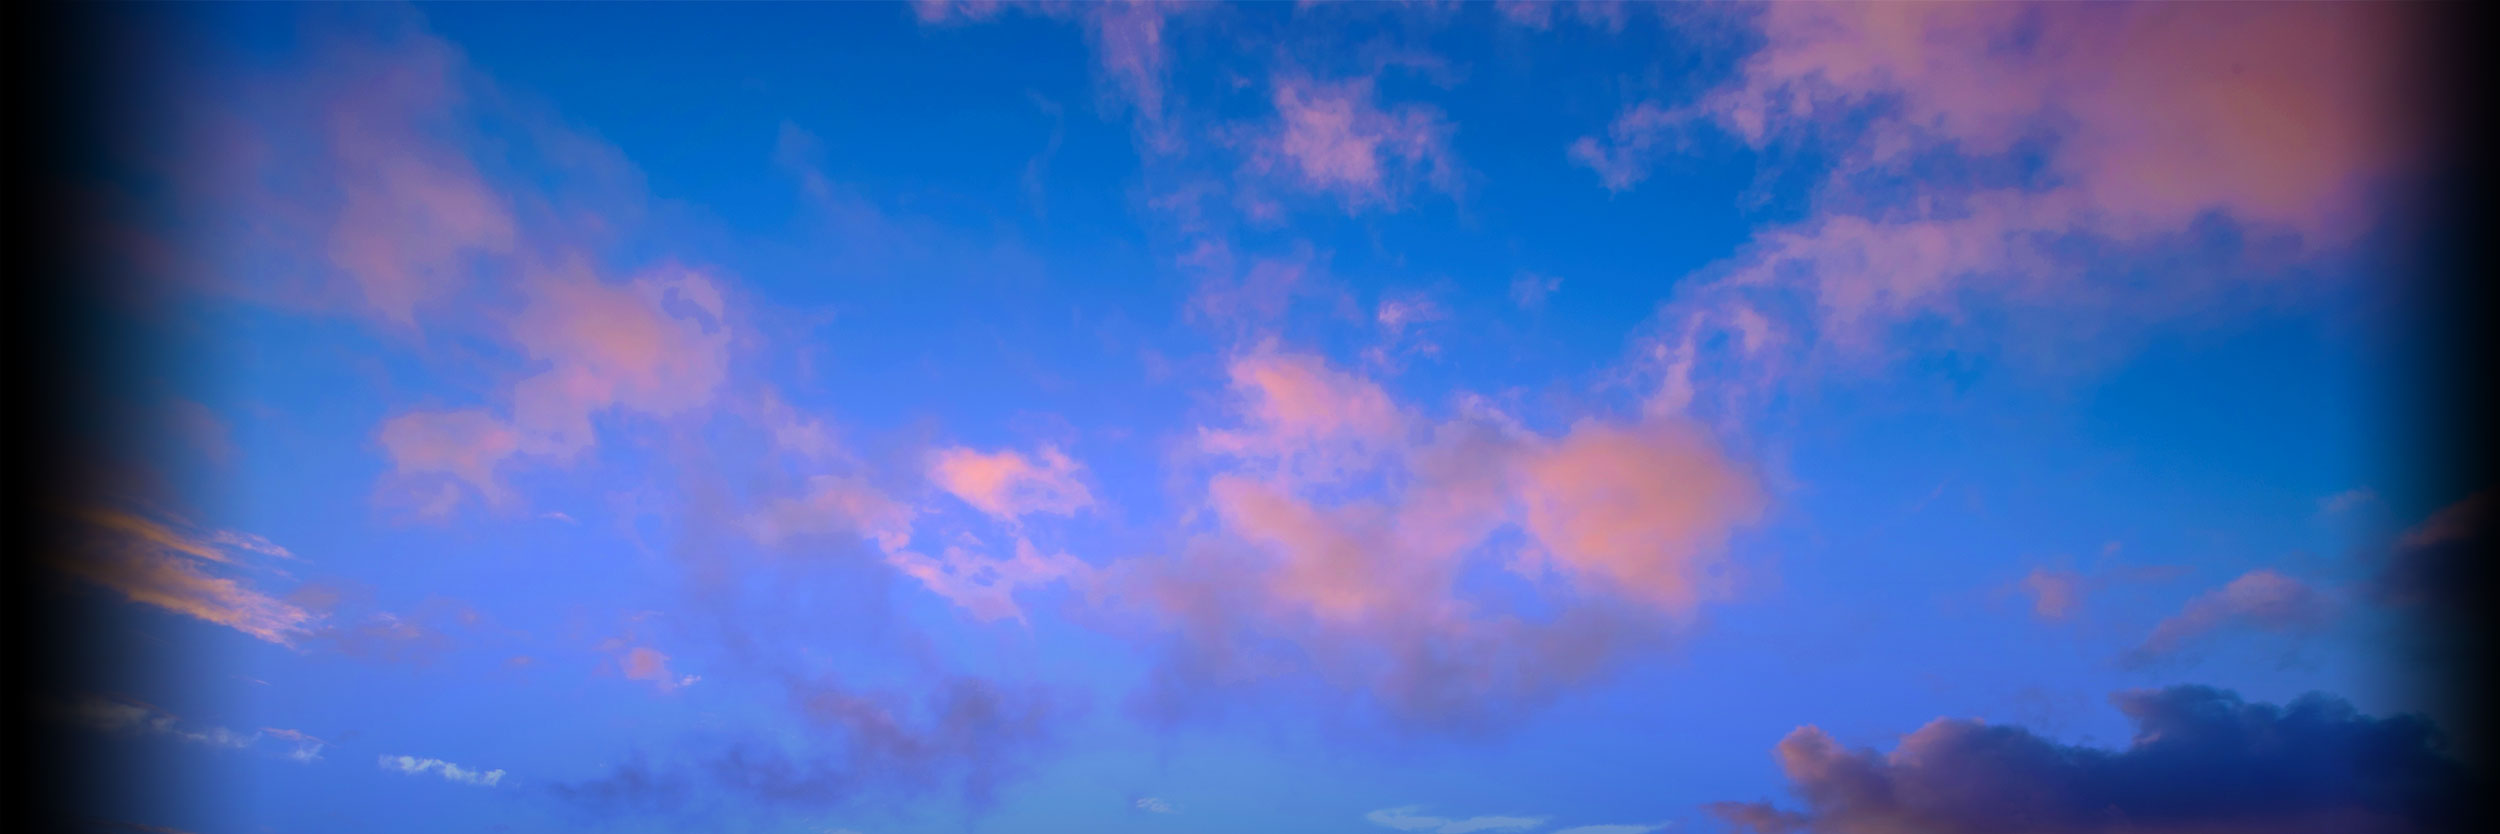 blue sky image